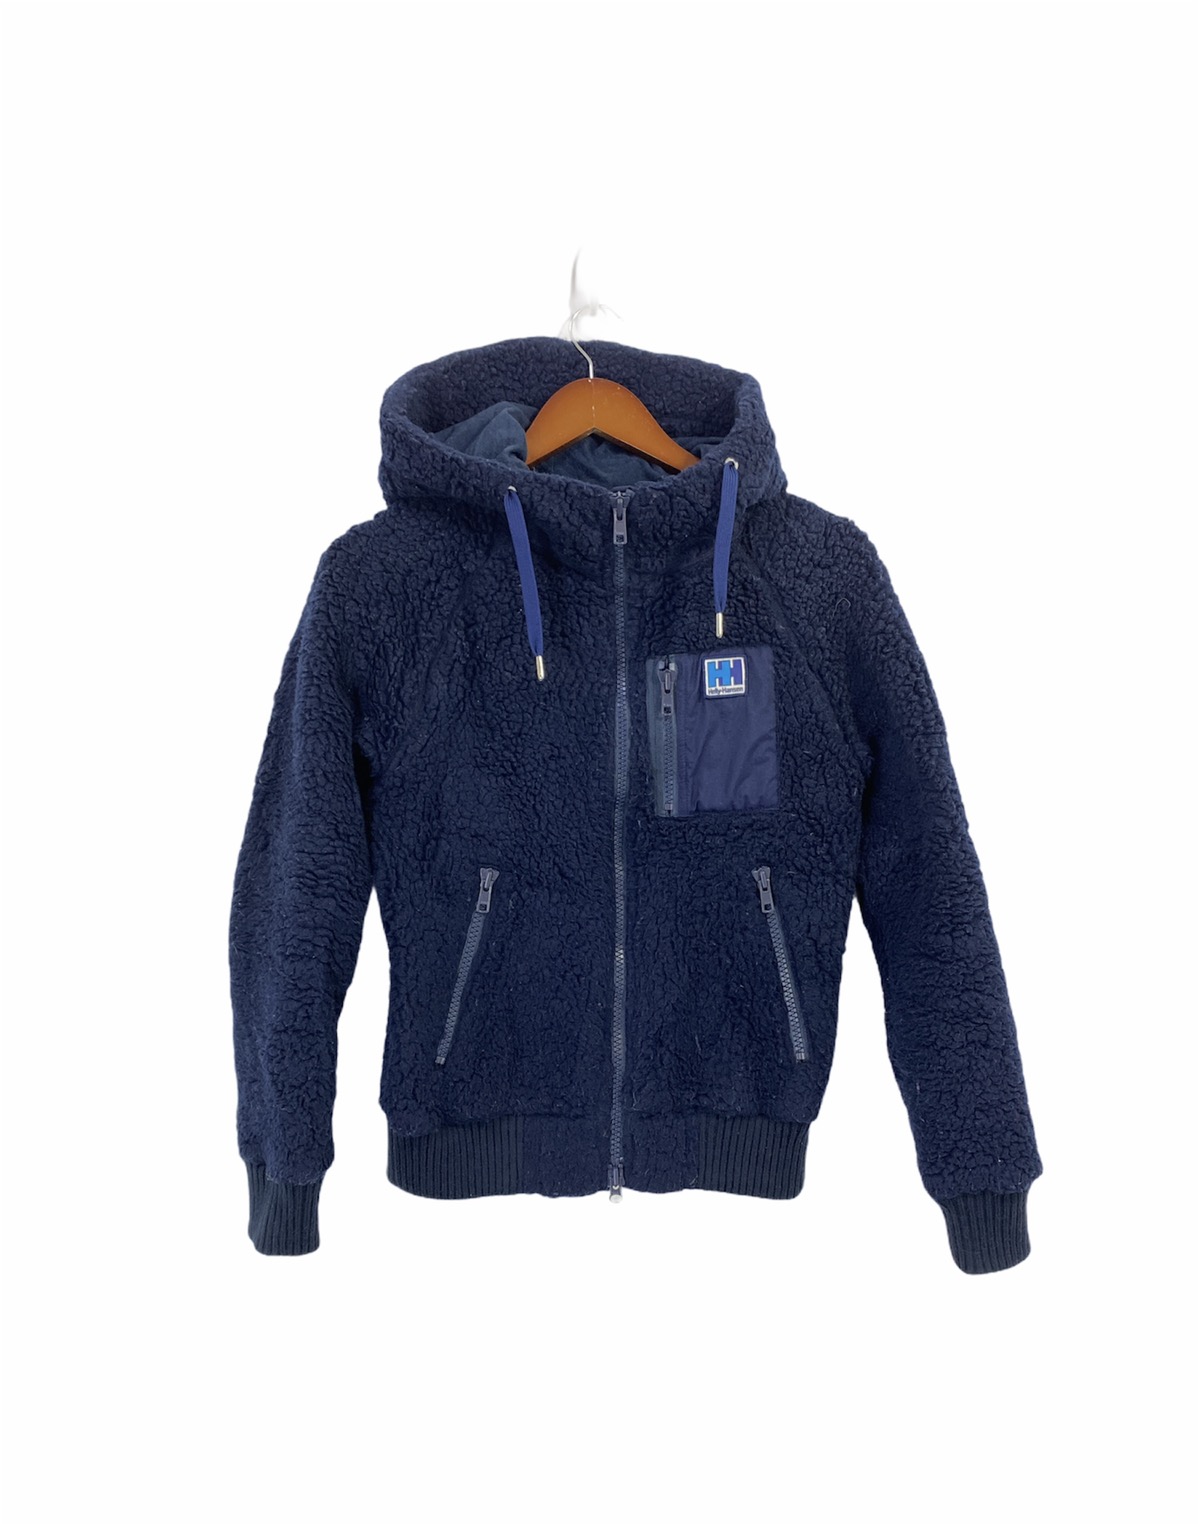 Vintage - Helly hansen Sherpa Fleece Jacket With Hoodies Design - 1